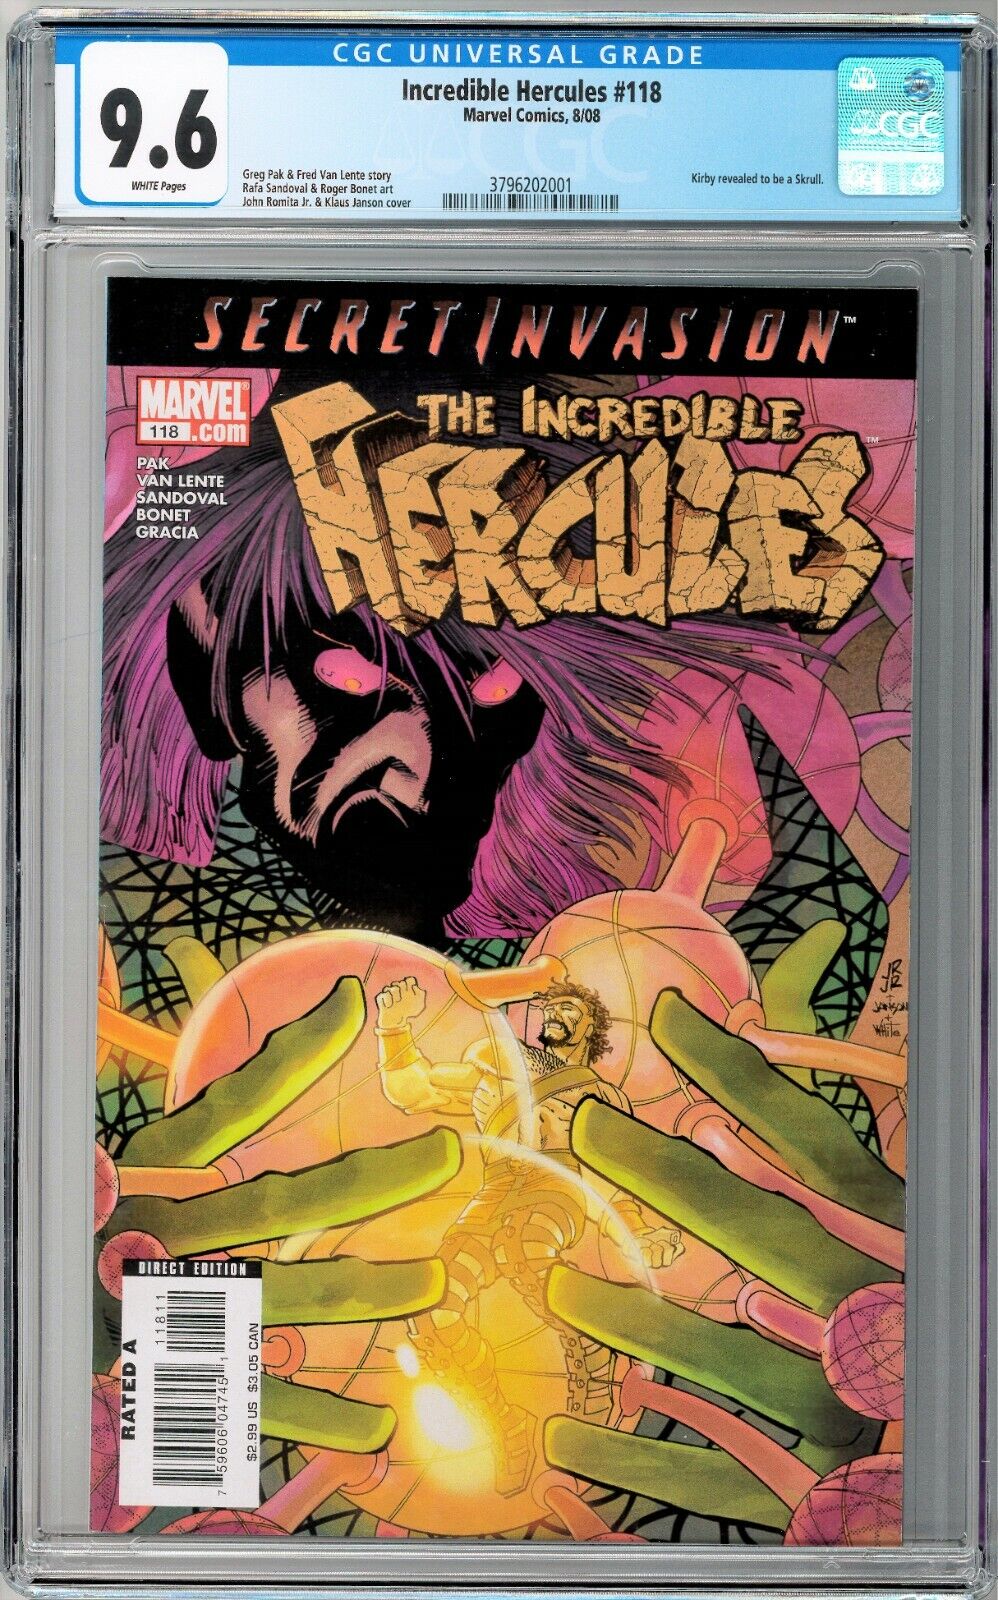 Incredible Hercules #118 CGC 9.6 (Aug 2008, Marvel) JRJ Cover, Secret Invasion